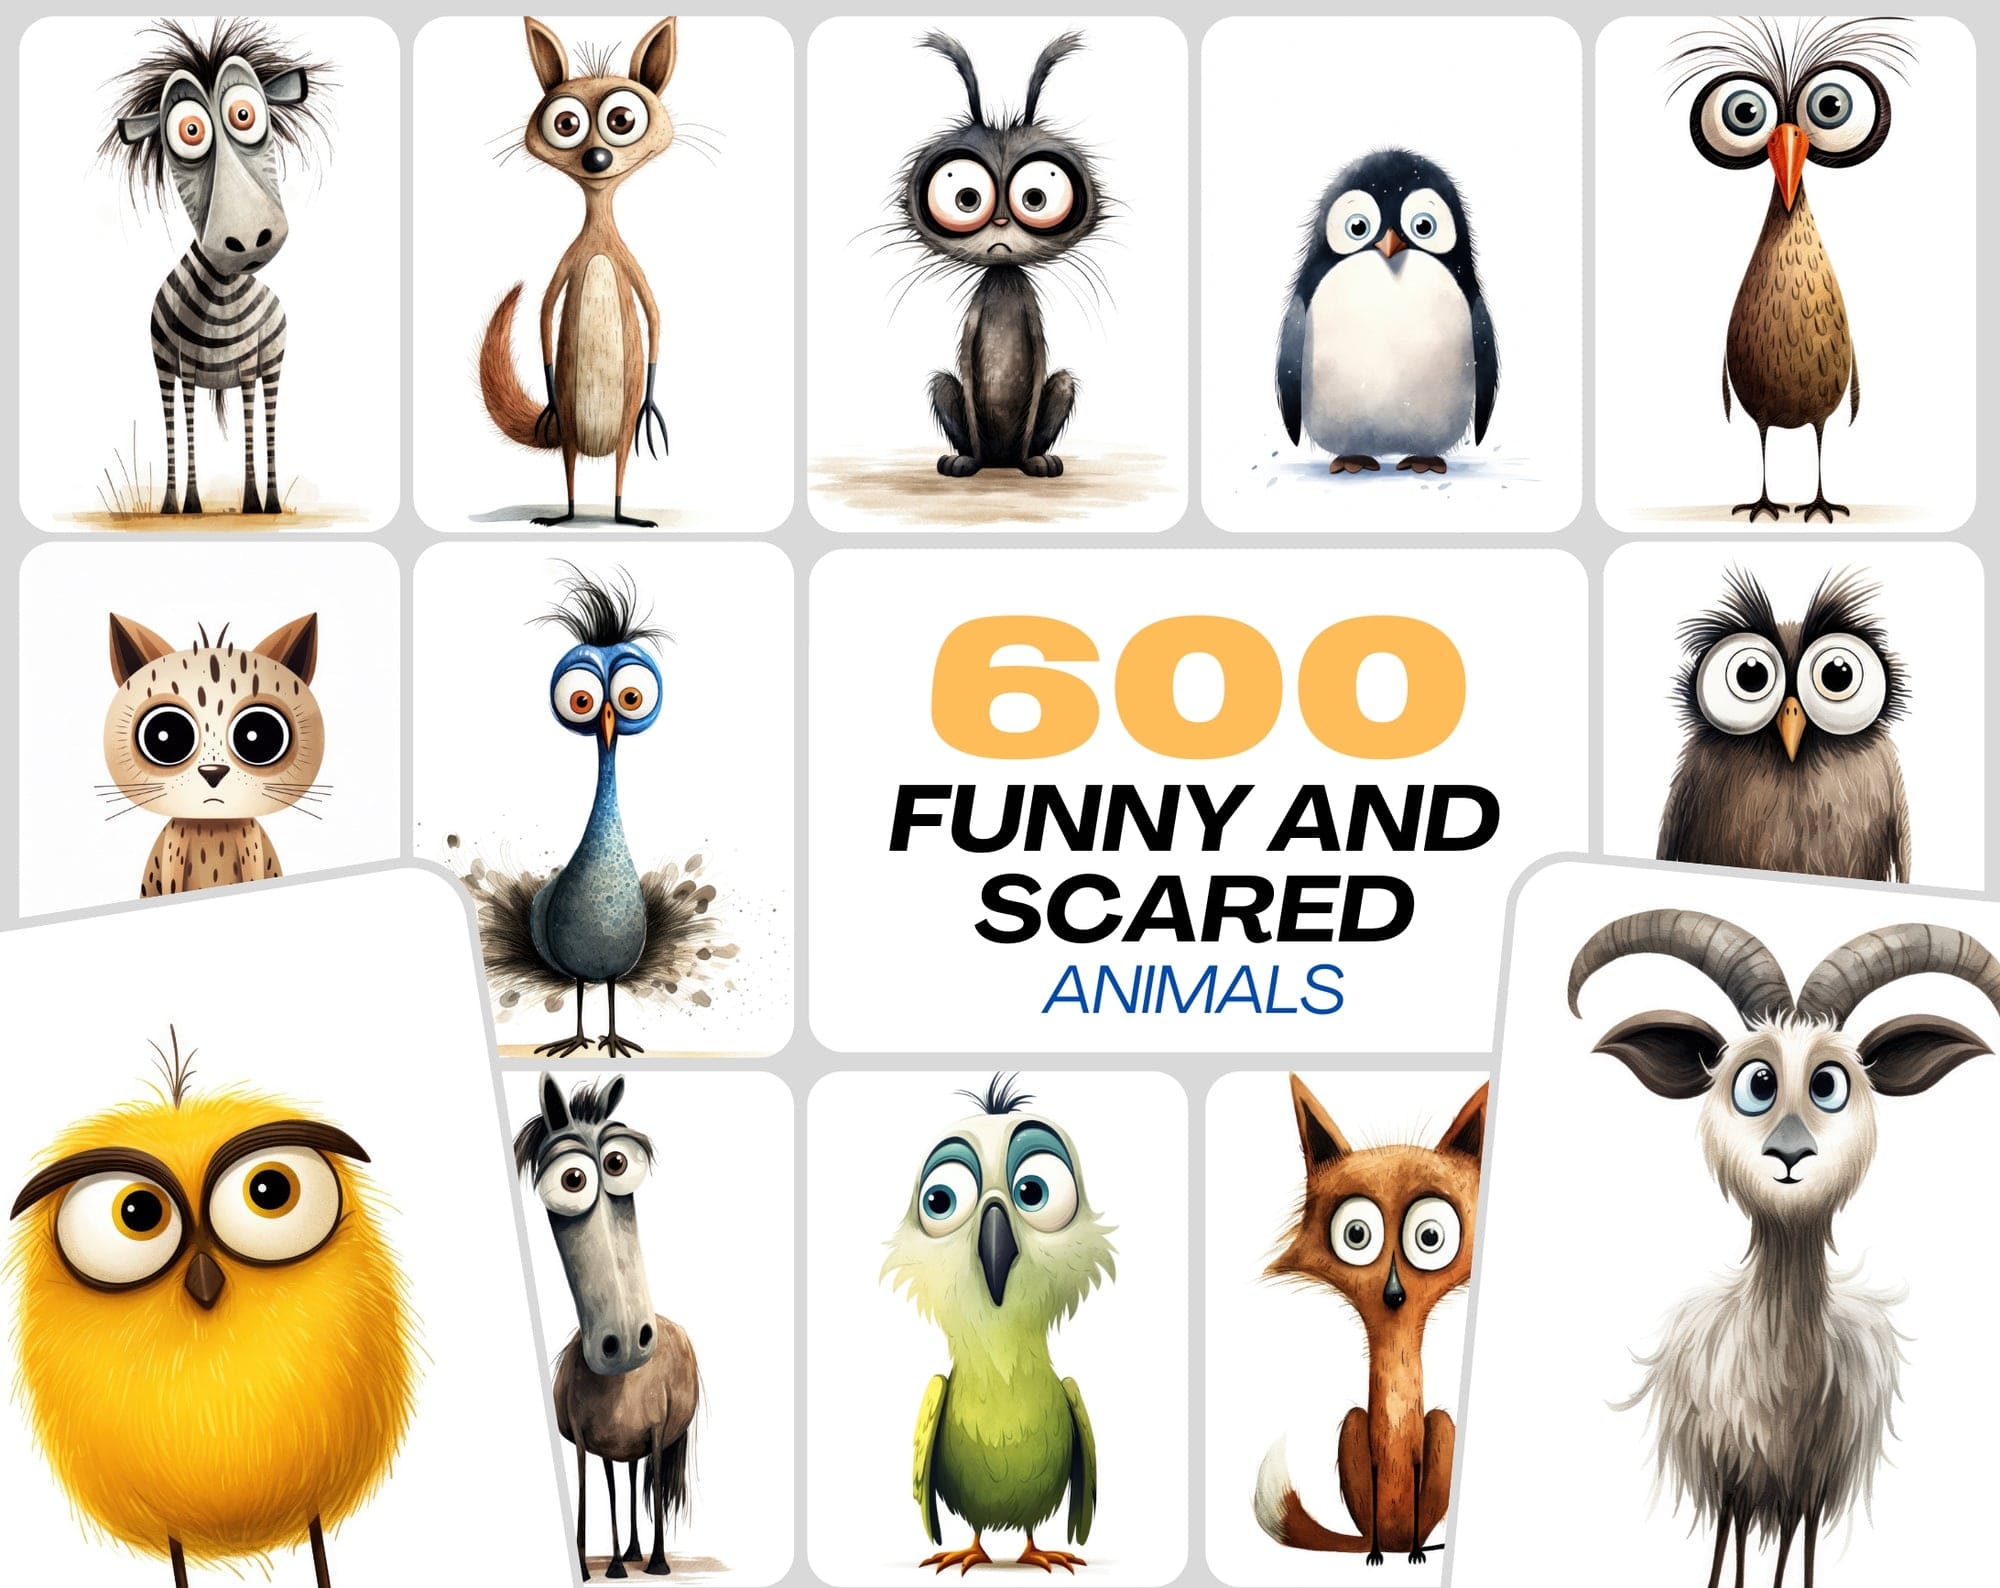 600 Scared & Funny Animals PNG Clipart Set, High-Resolution Commercial Use Graphics with Transparent Background, Big-Eyed Wonder Animals Digital Download Sumobundle